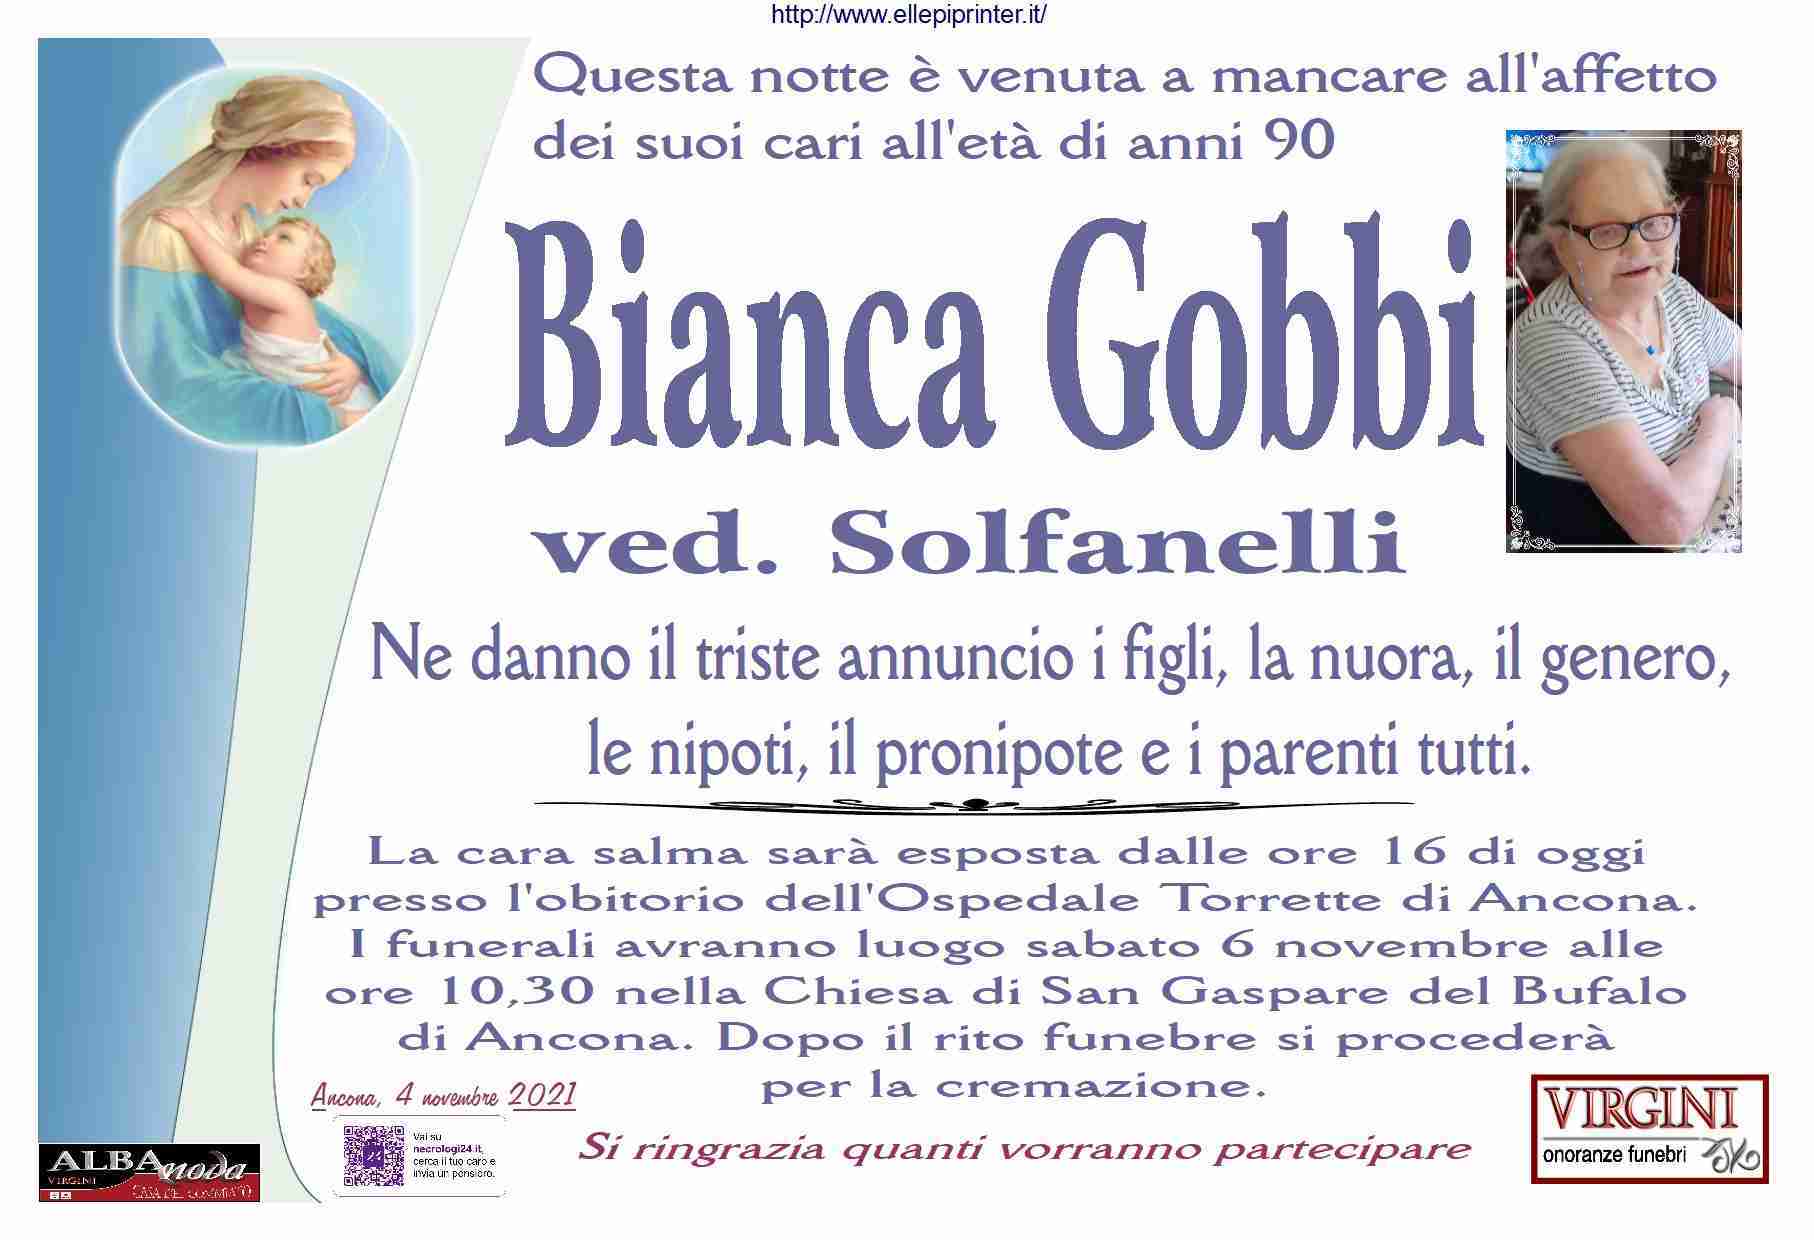 Bianca Gobbi